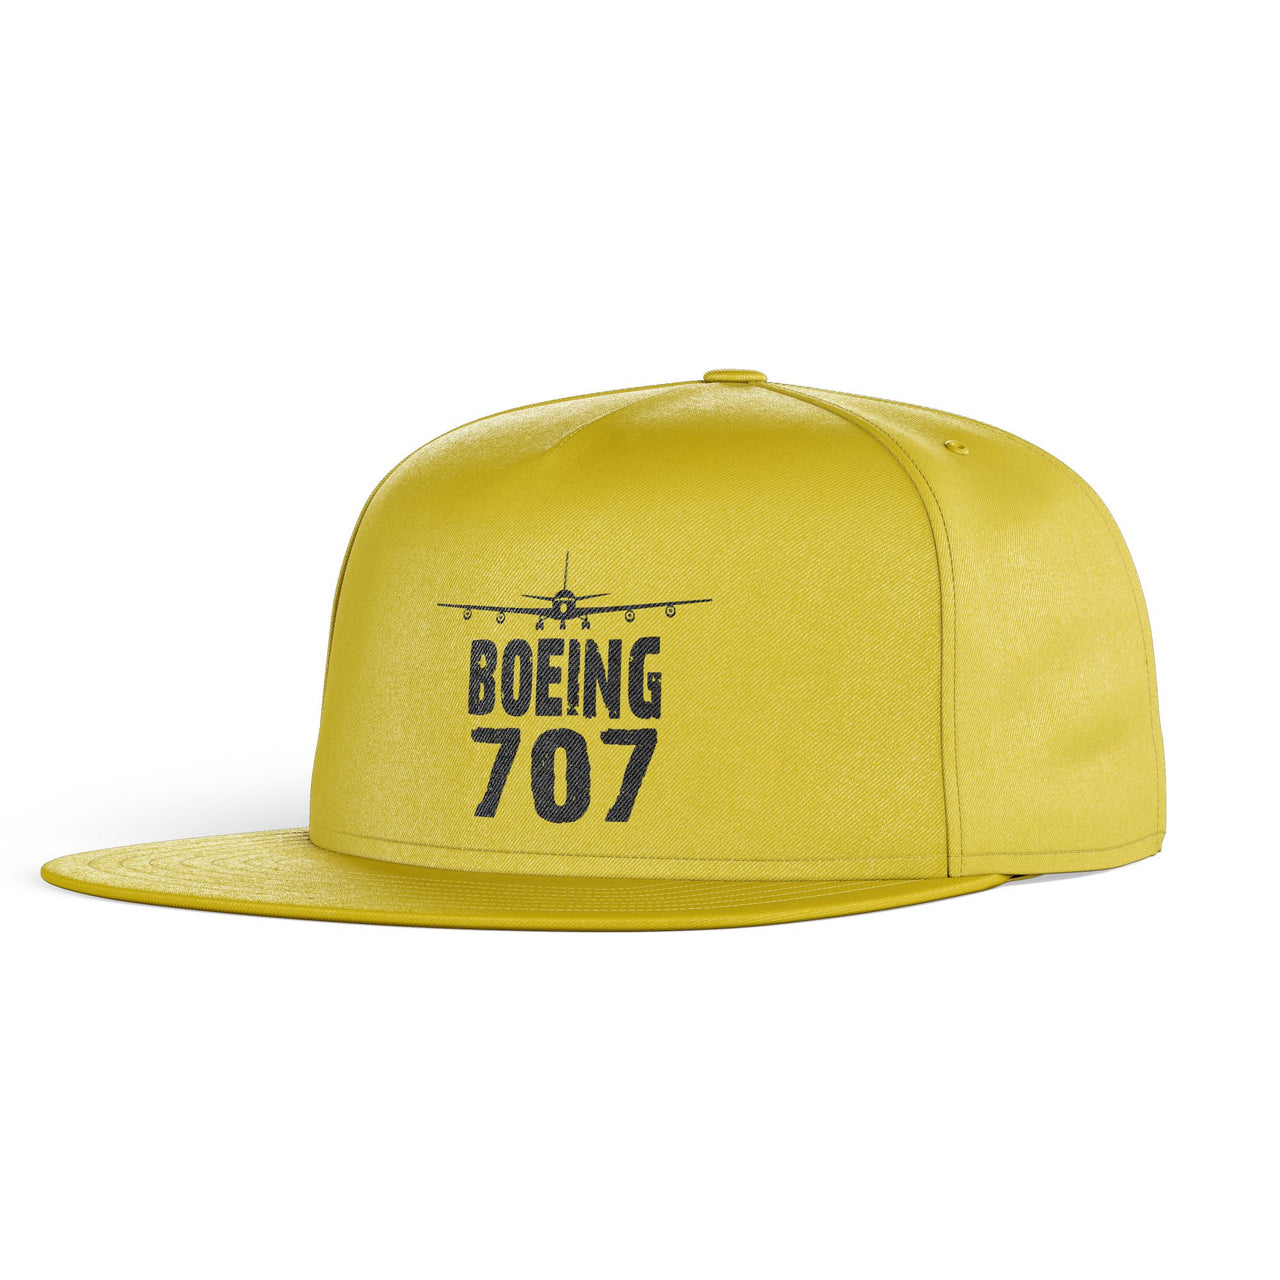 Boeing 707 & Plane Designed Snapback Caps & Hats